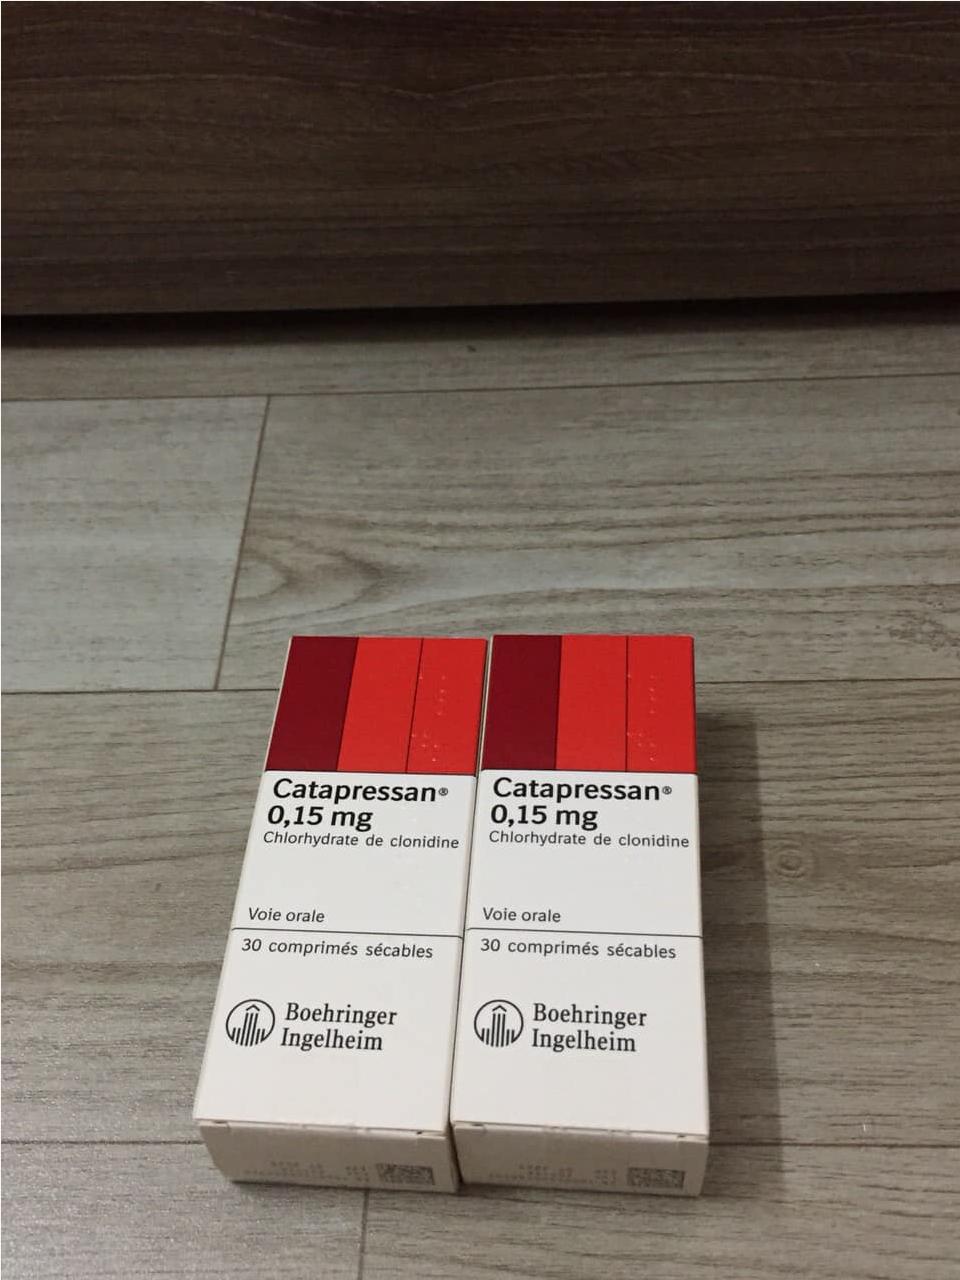 Thuốc Catapressan Clonidine 0.15mg giá bao nhiêu mua ở đâu?